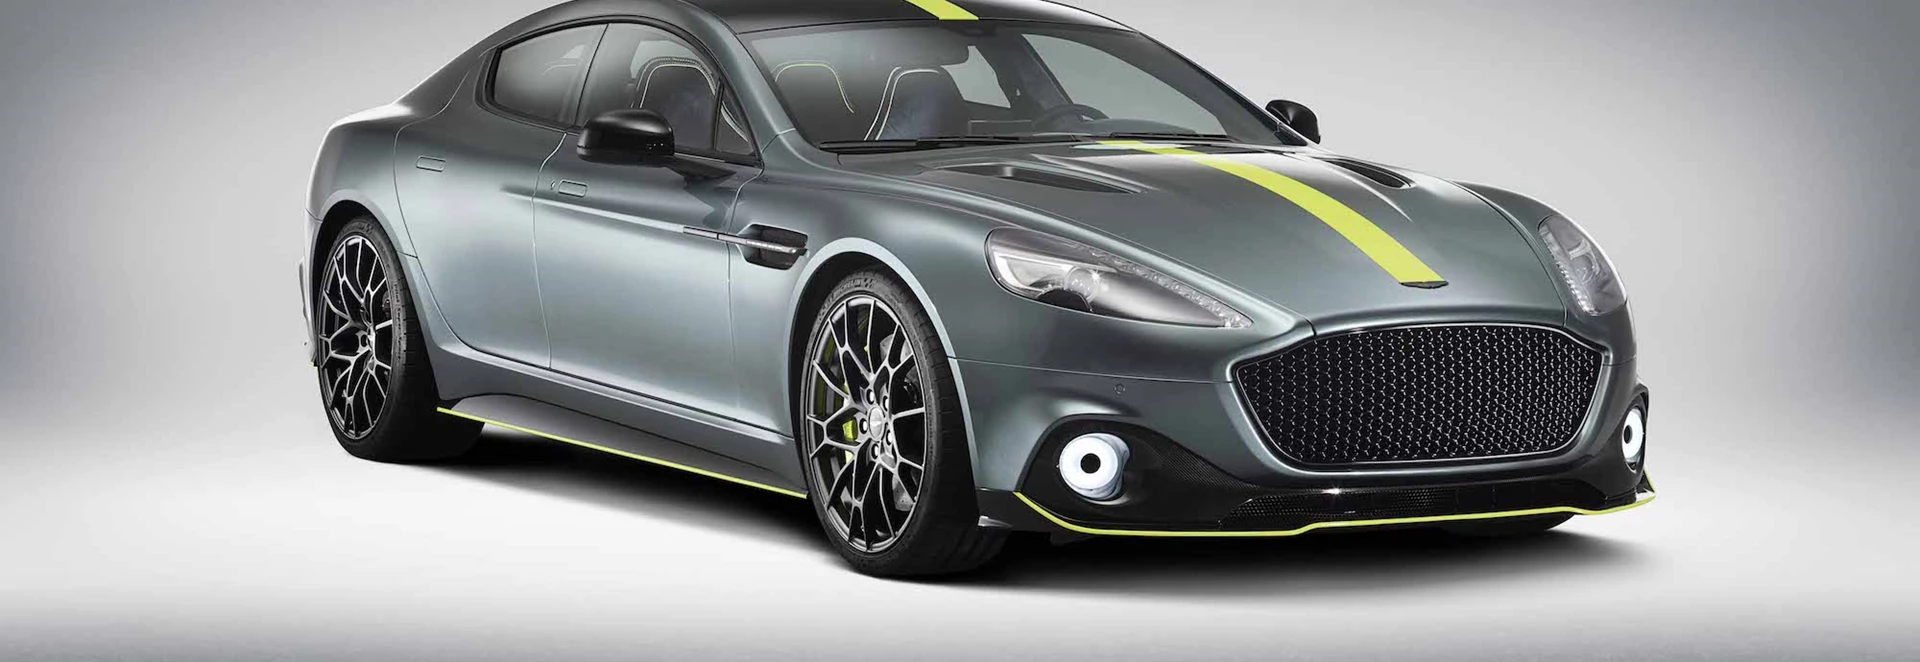 Aston Martin reveals limited-run Rapide AMR